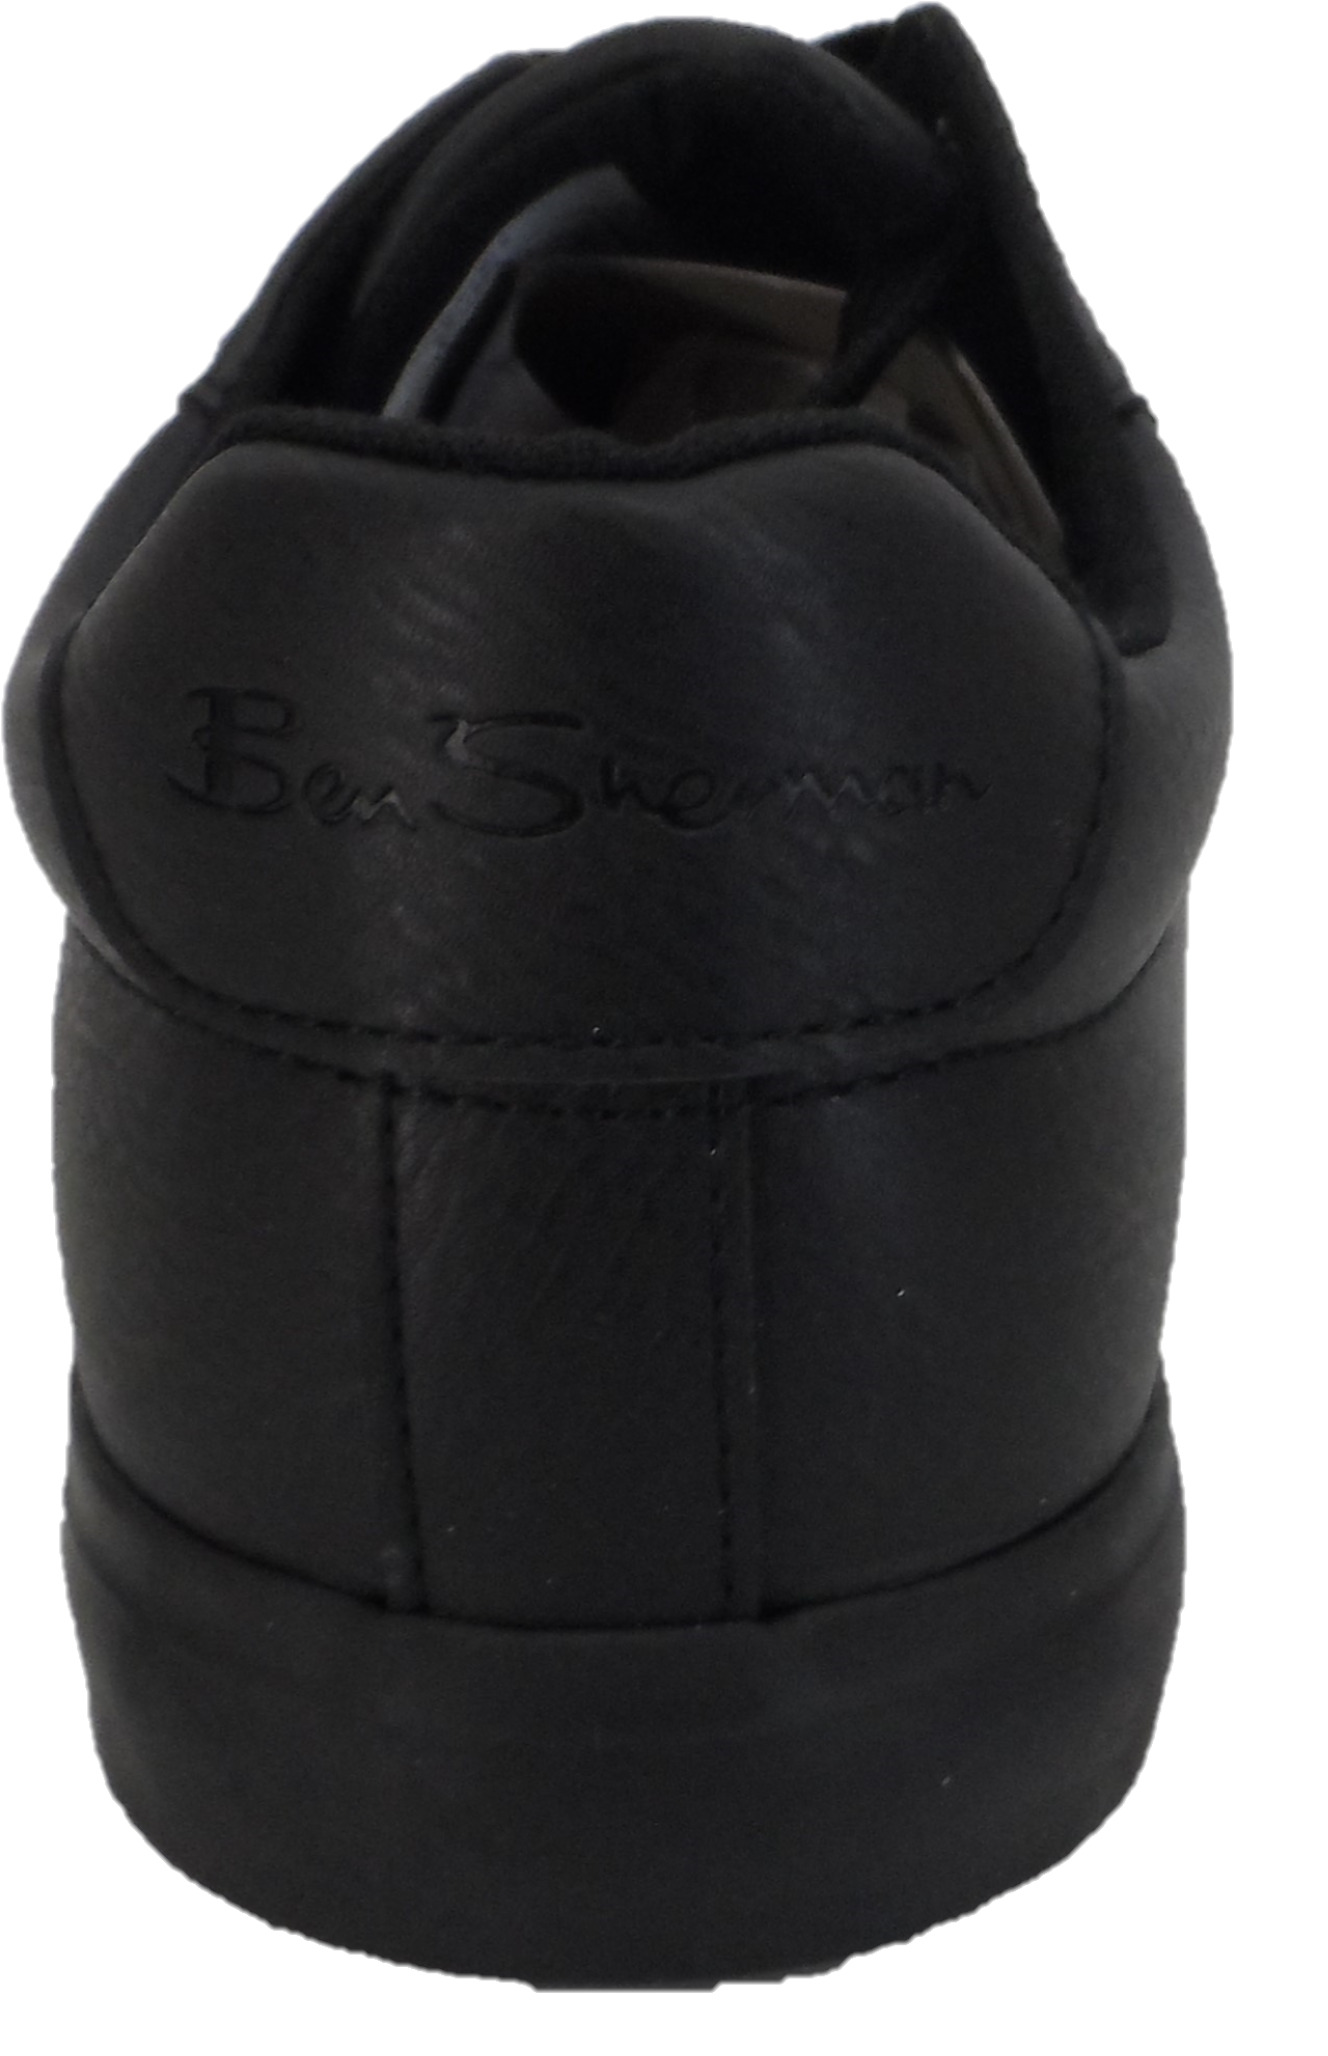 Zapatillas de deporte mod retro negras Scooper para hombre Ben Sherman